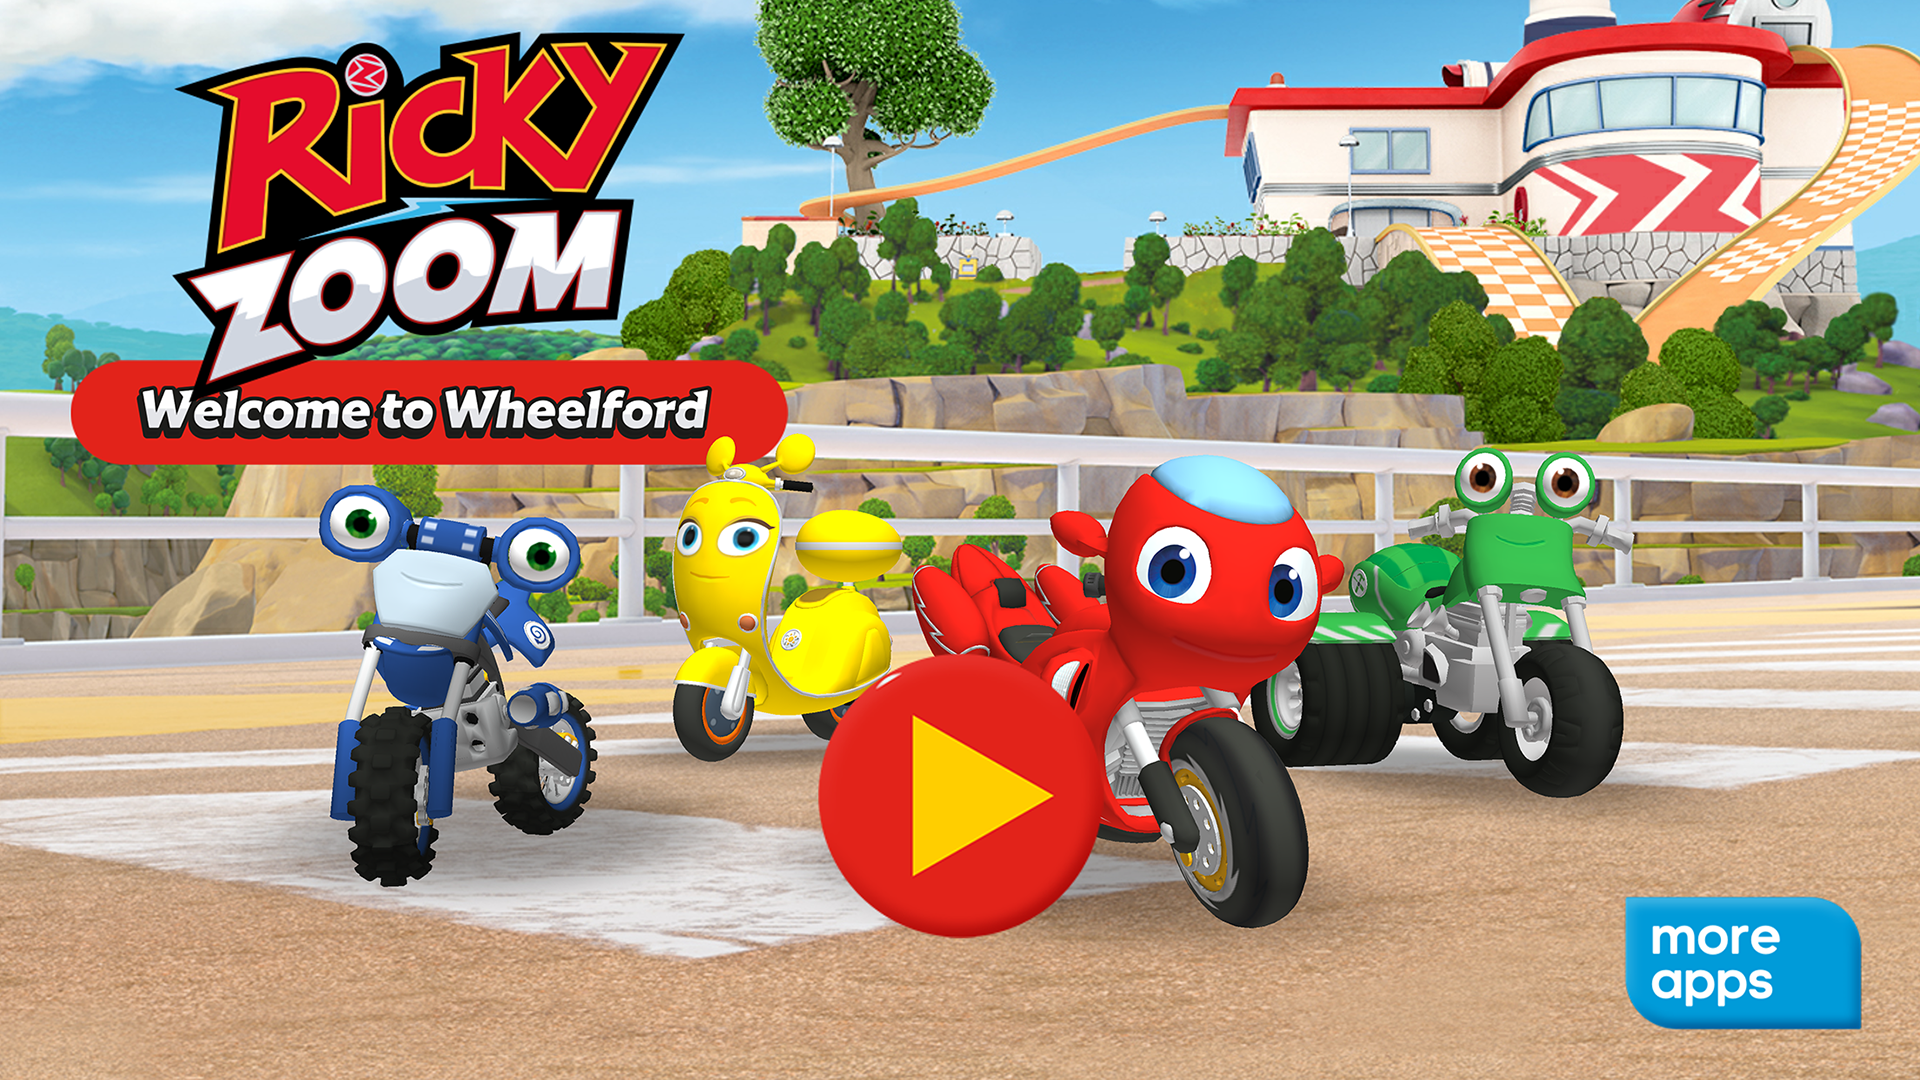 Screenshot 1 of Ricky Zoom™: Welcome to Wheelford 